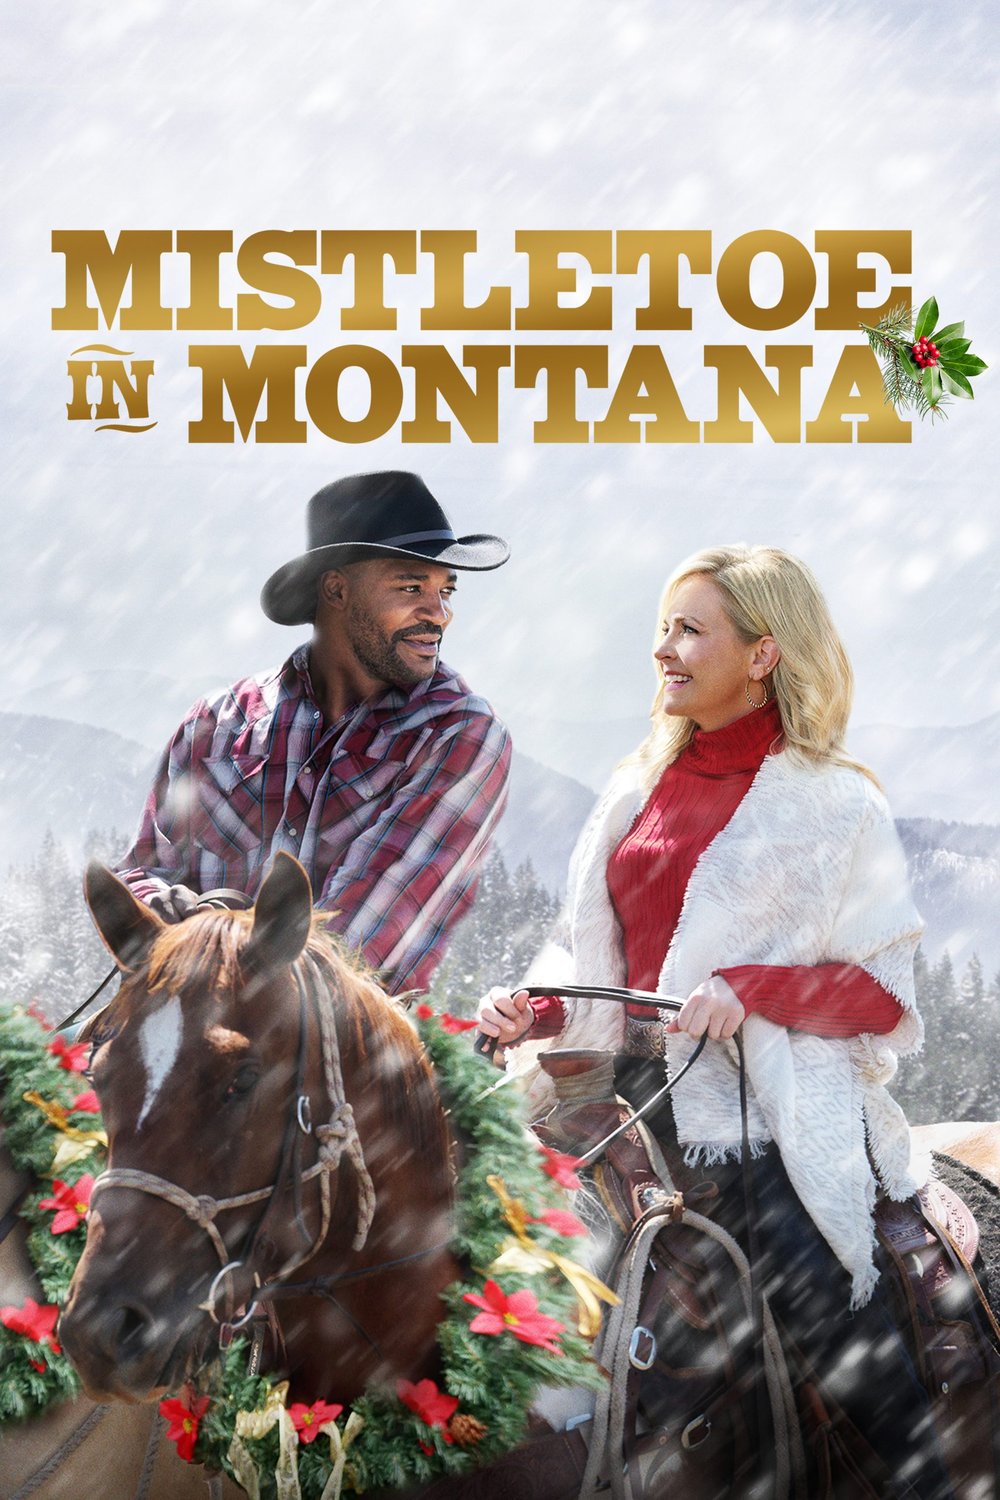 Poster of the movie Mistletoe in Montana